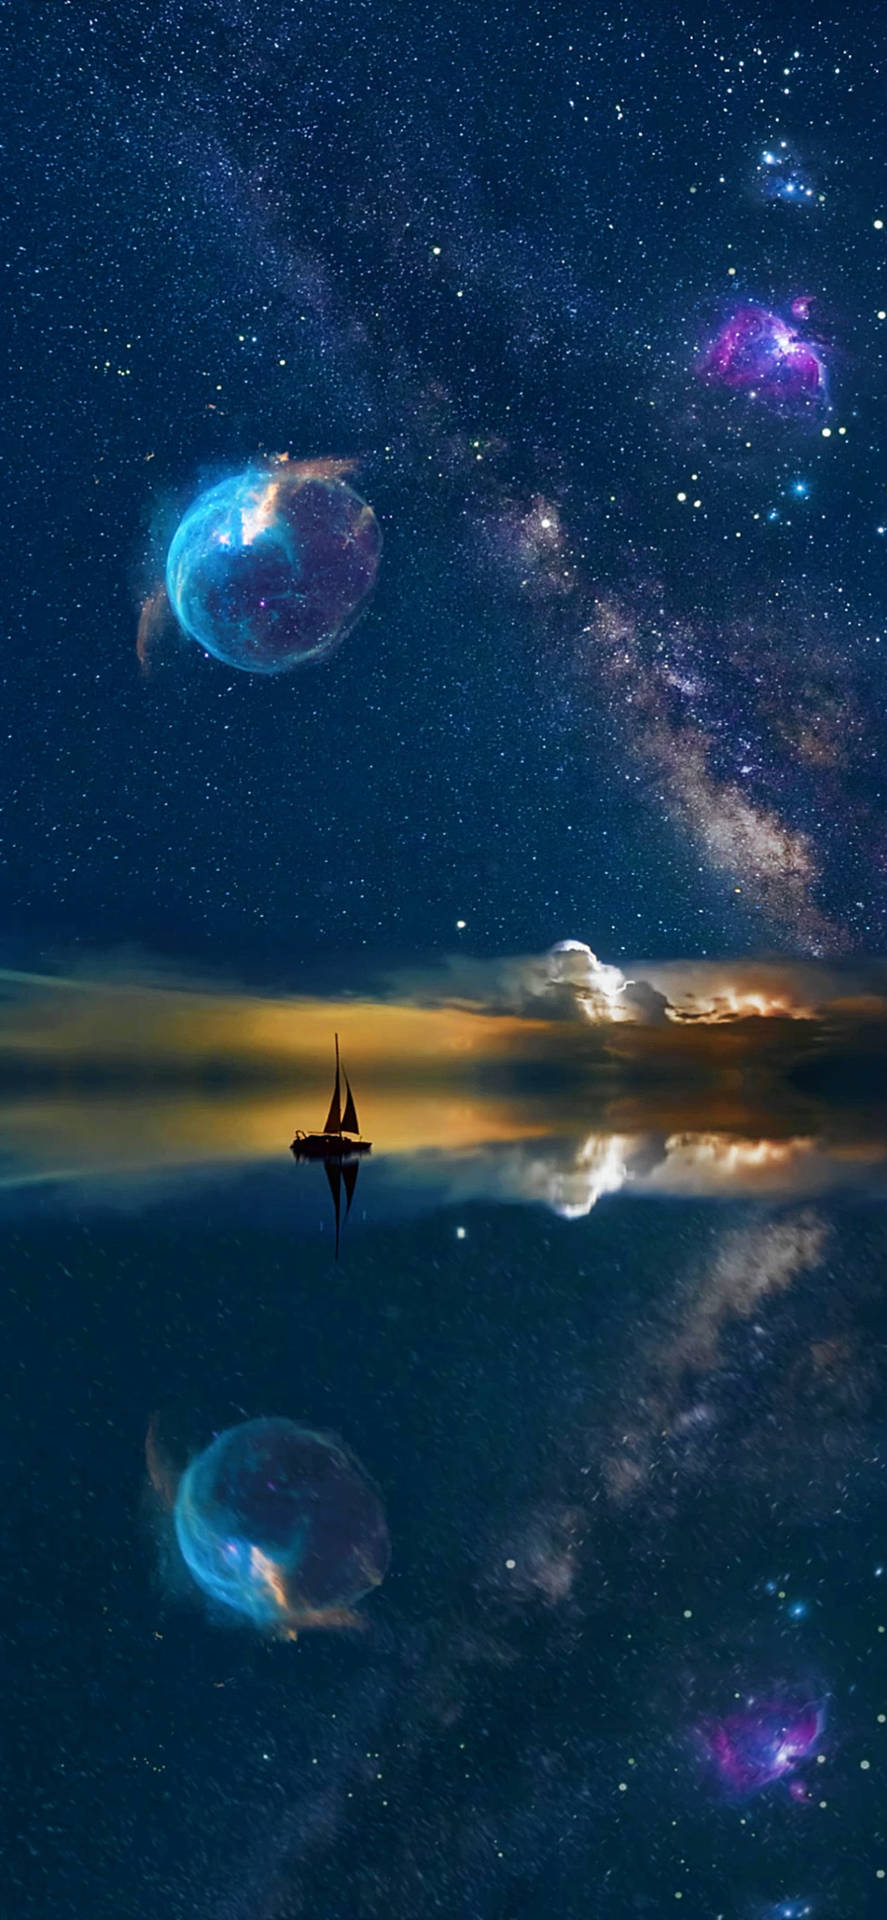 Cosmos Above The Sea